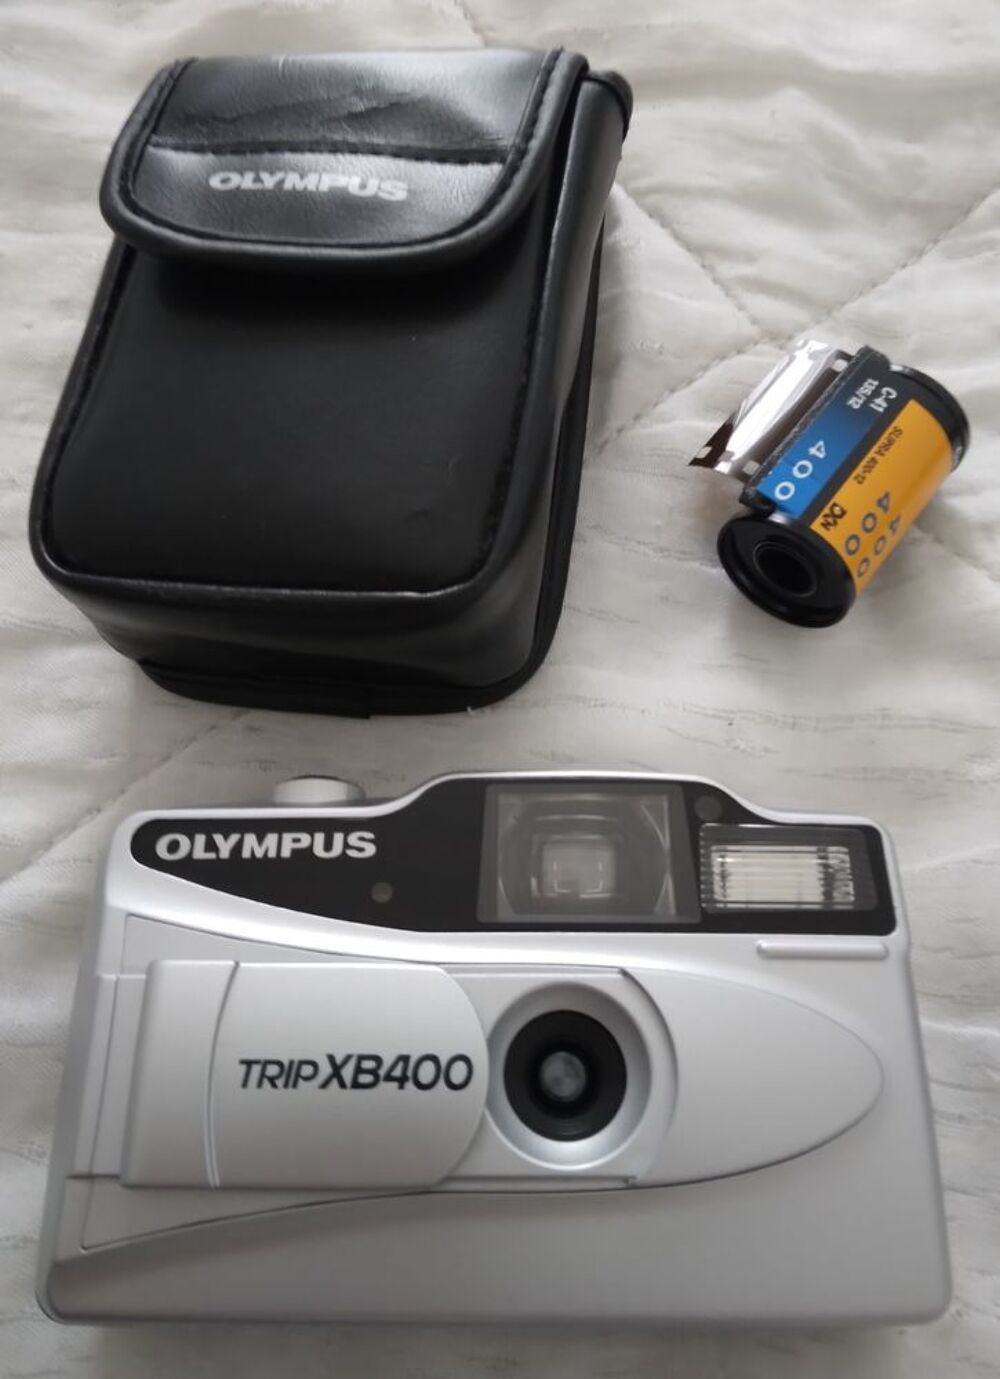 Olympus Trip XB400 Photos/Video/TV